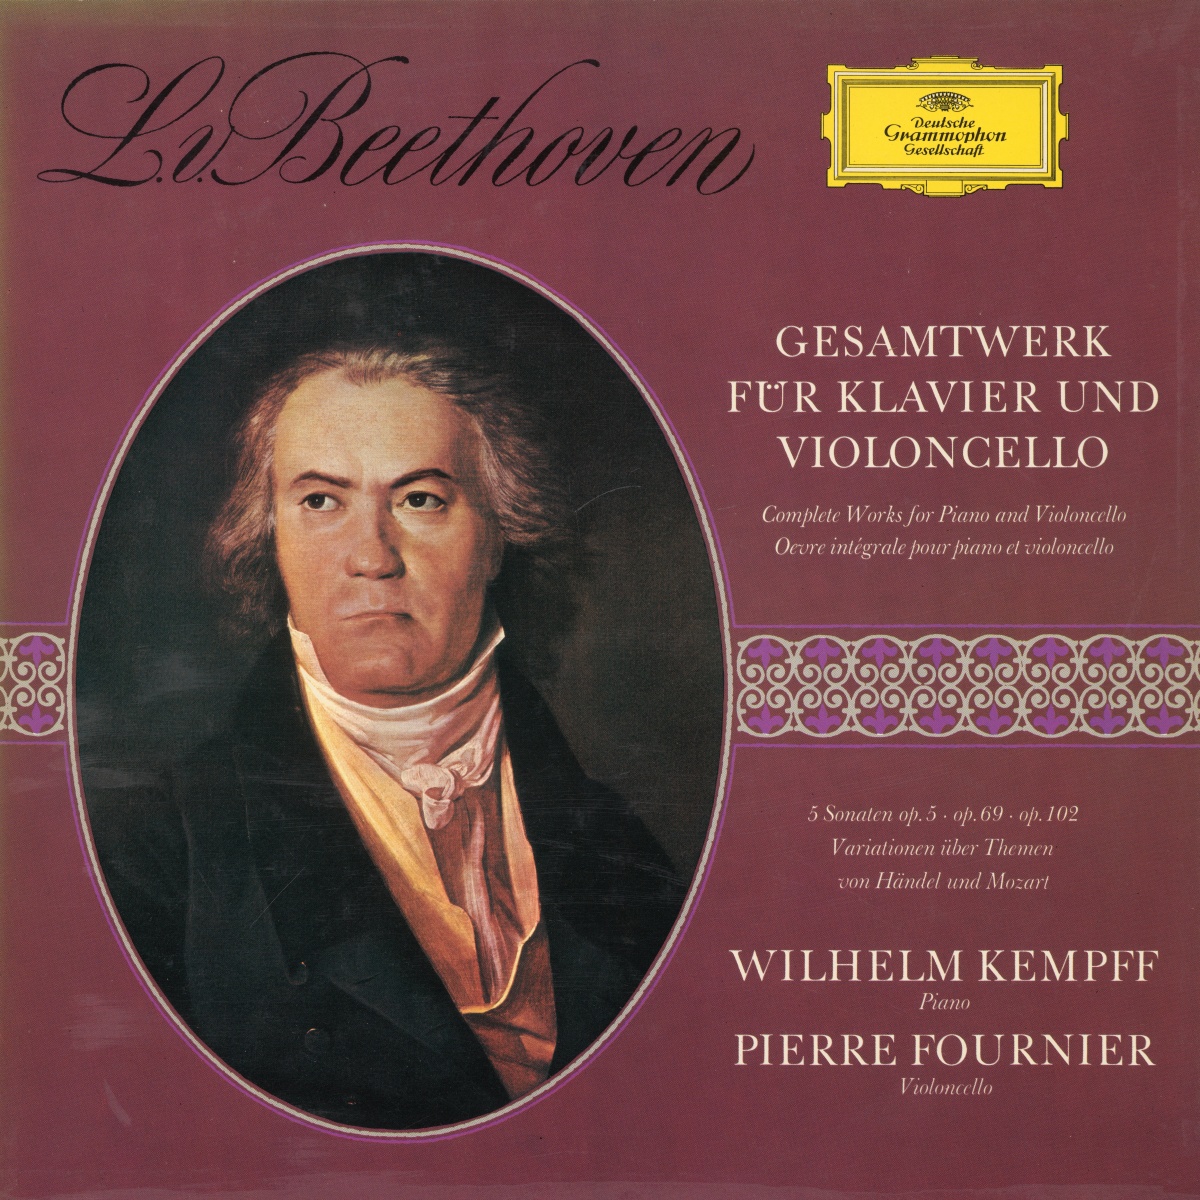 Recto du coffret Deutsche Grammophon 138-993--95, avec un extrait d'une peinture de Ferdinand Georg Waldmüller